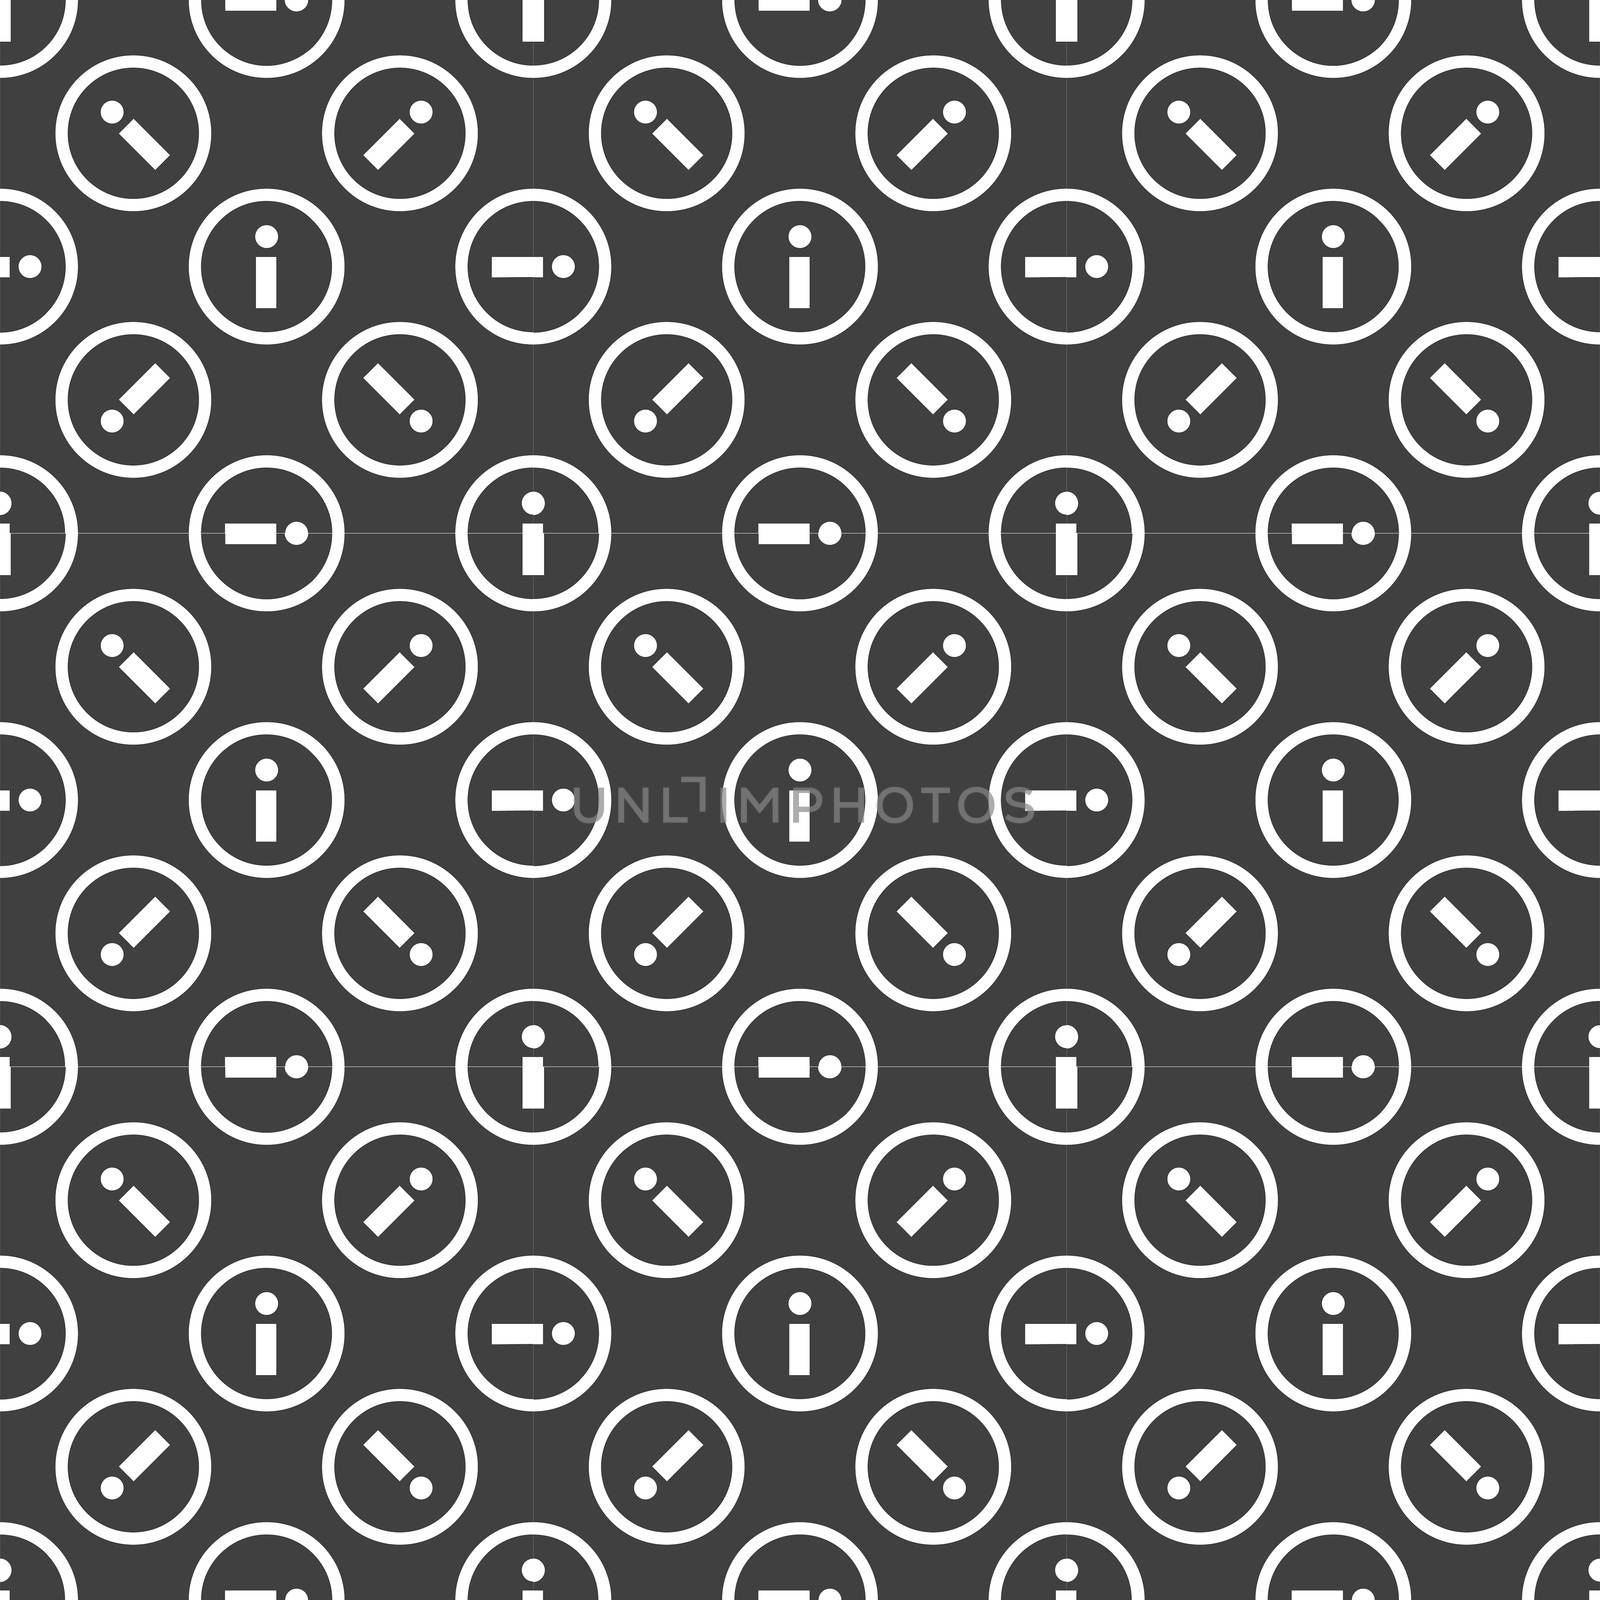 info web icon. flat design. Seamless pattern.